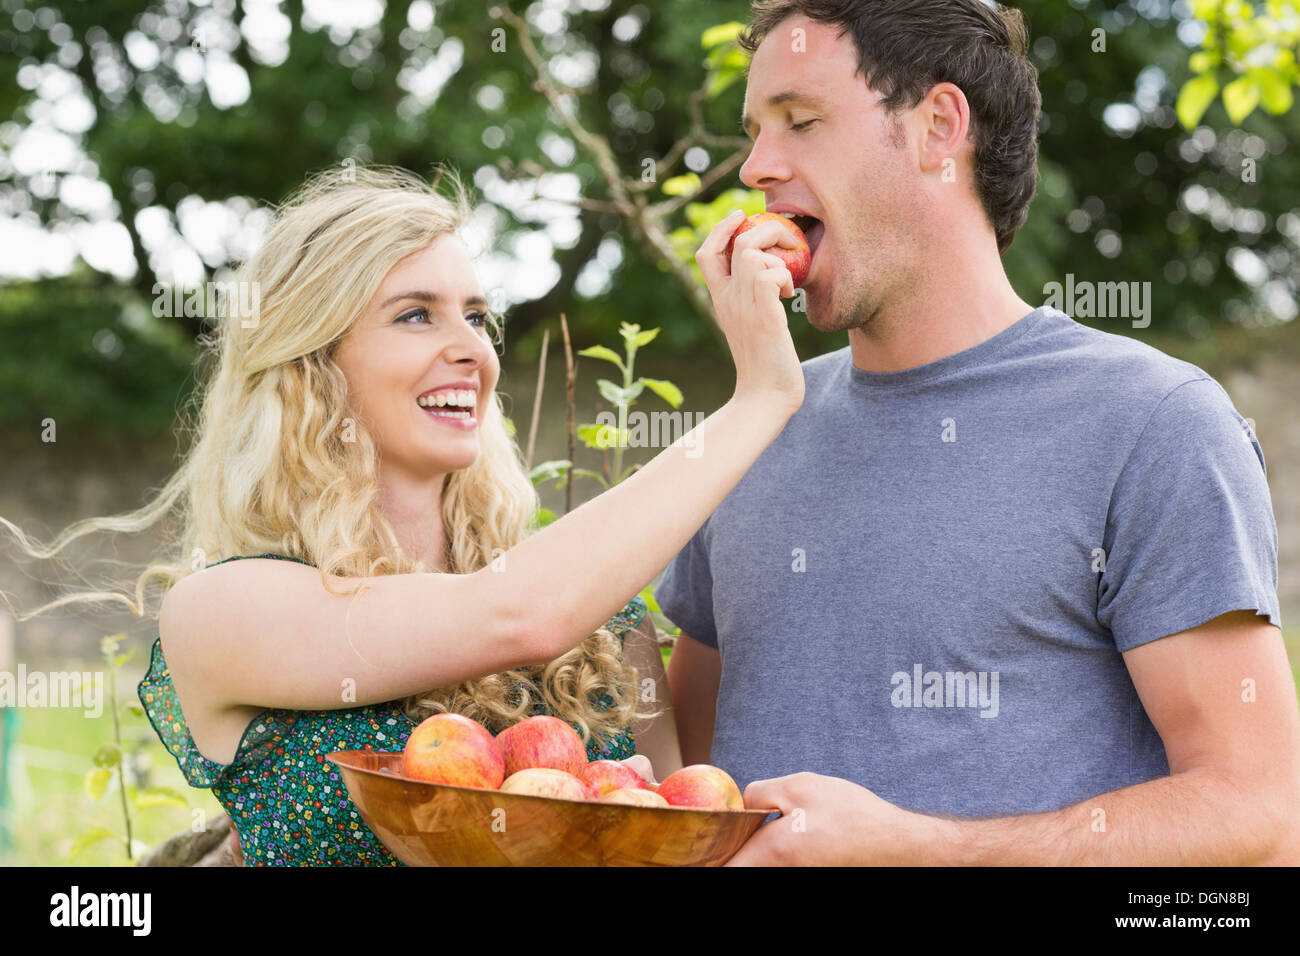 Blonde woman feeding her boyfriend with an apple Stock Photo